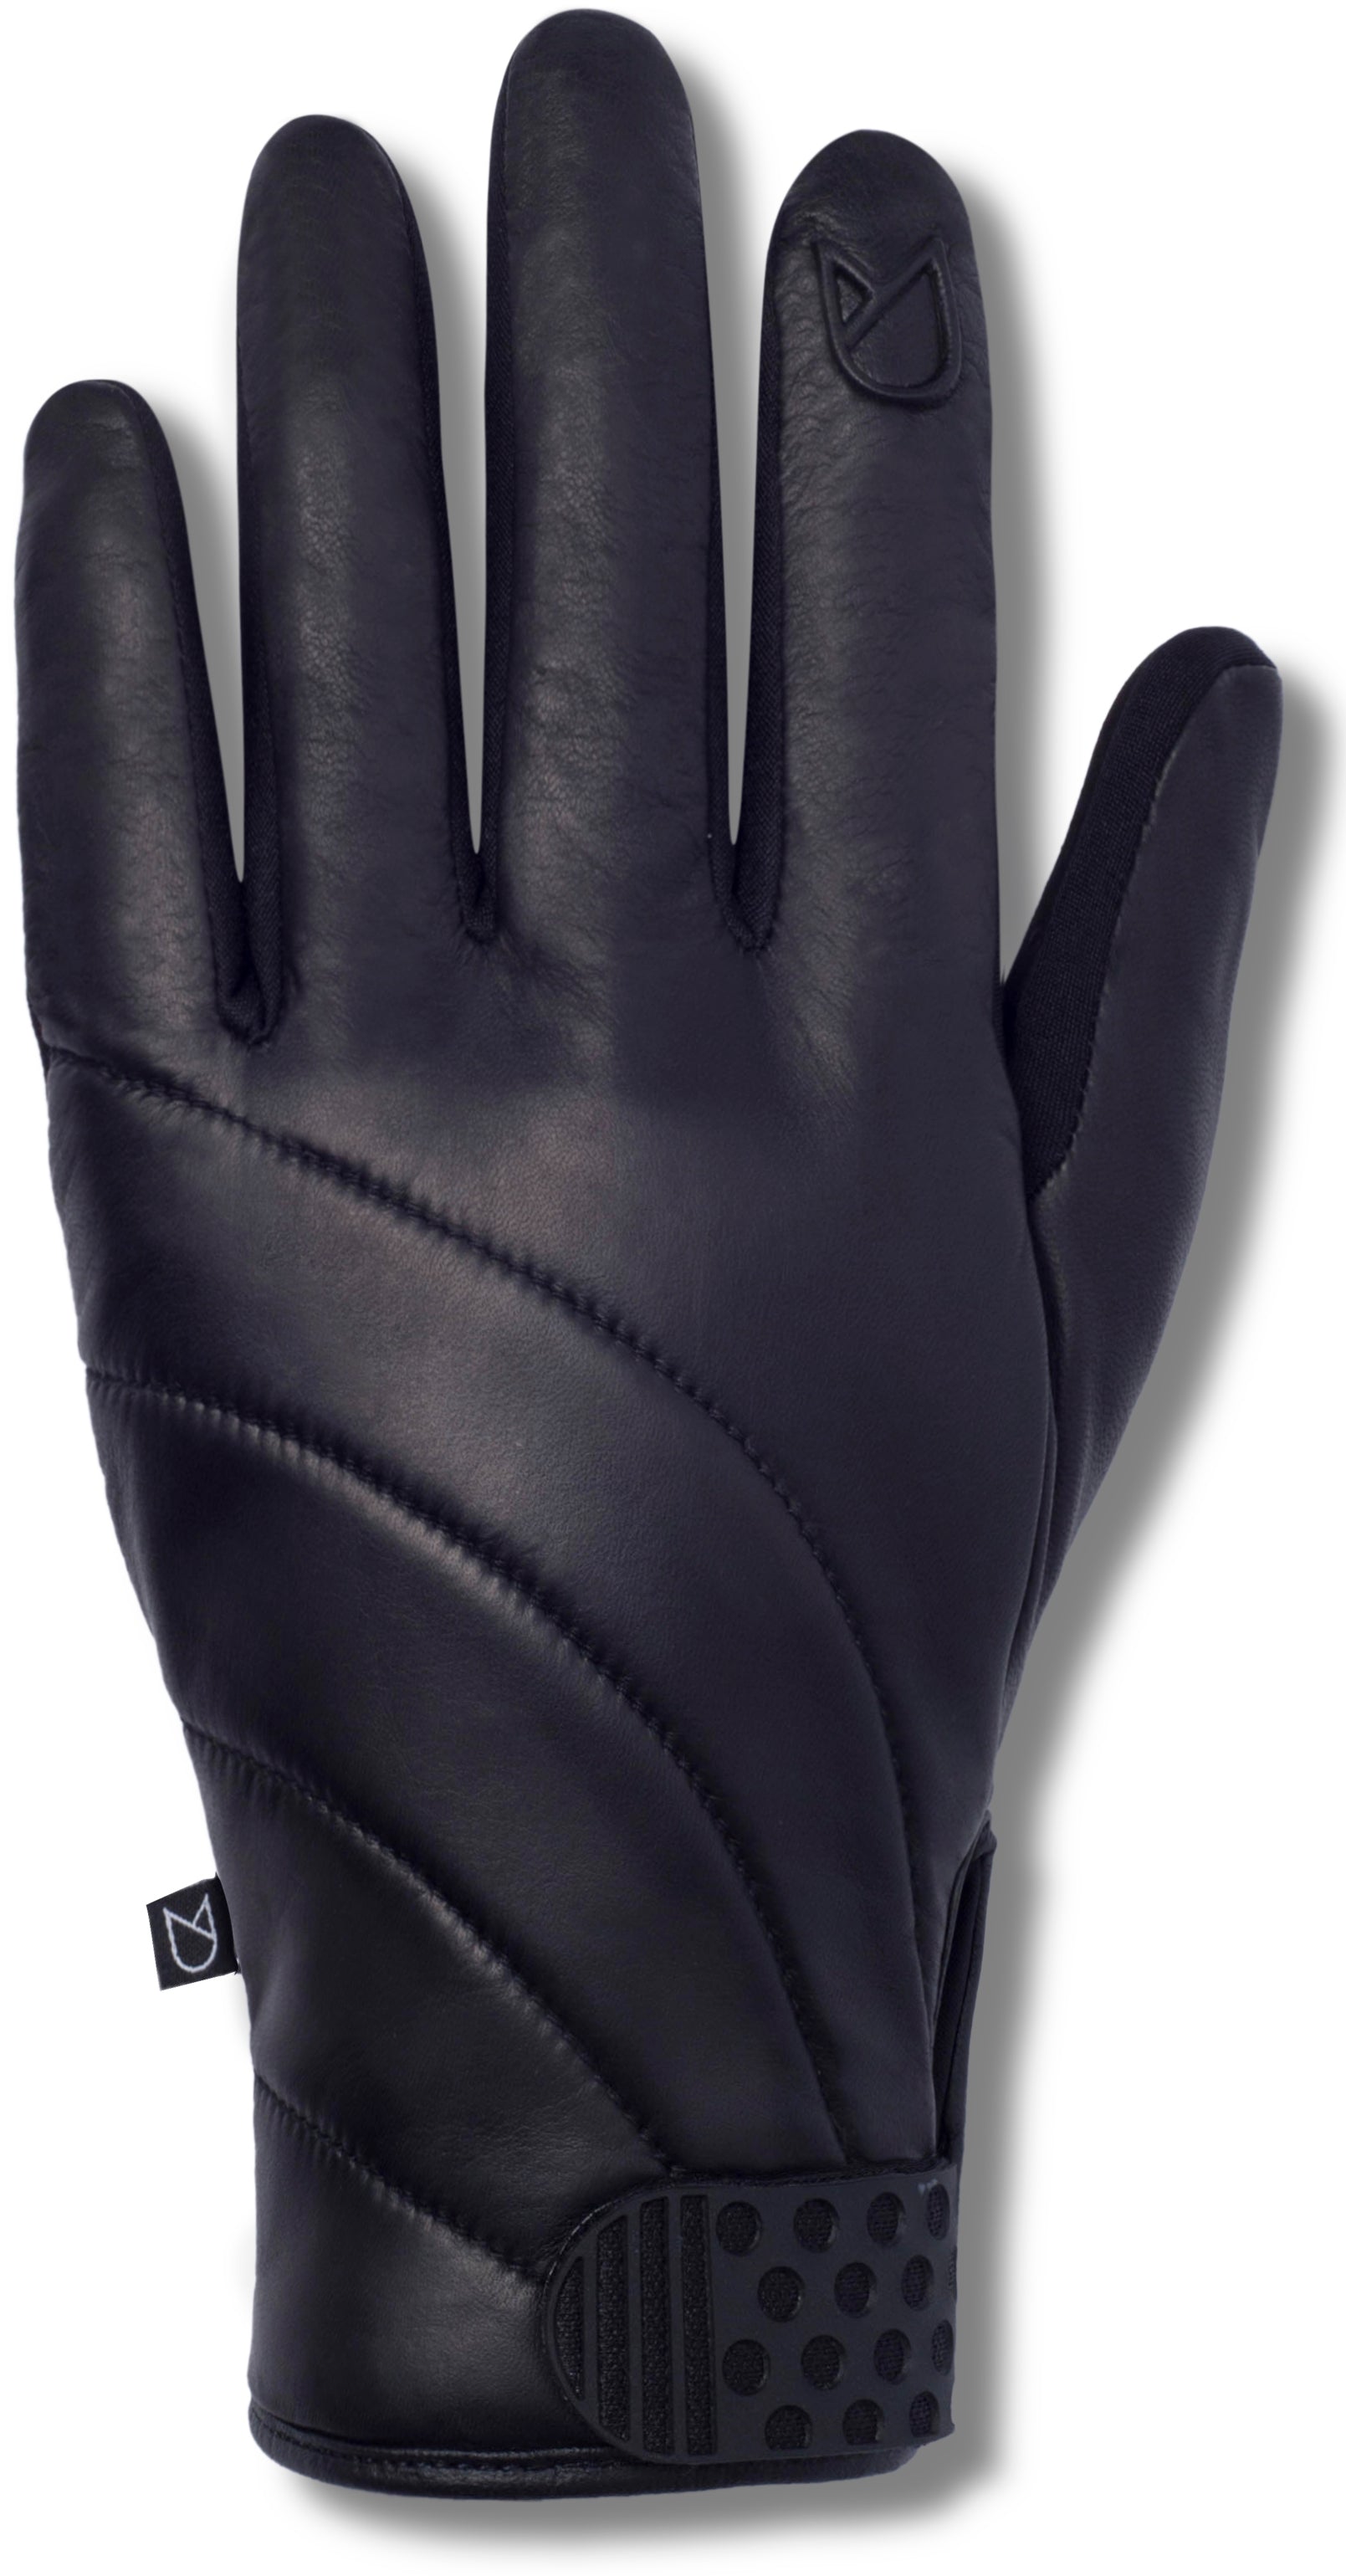 Underhanded Boomer Black Gloves